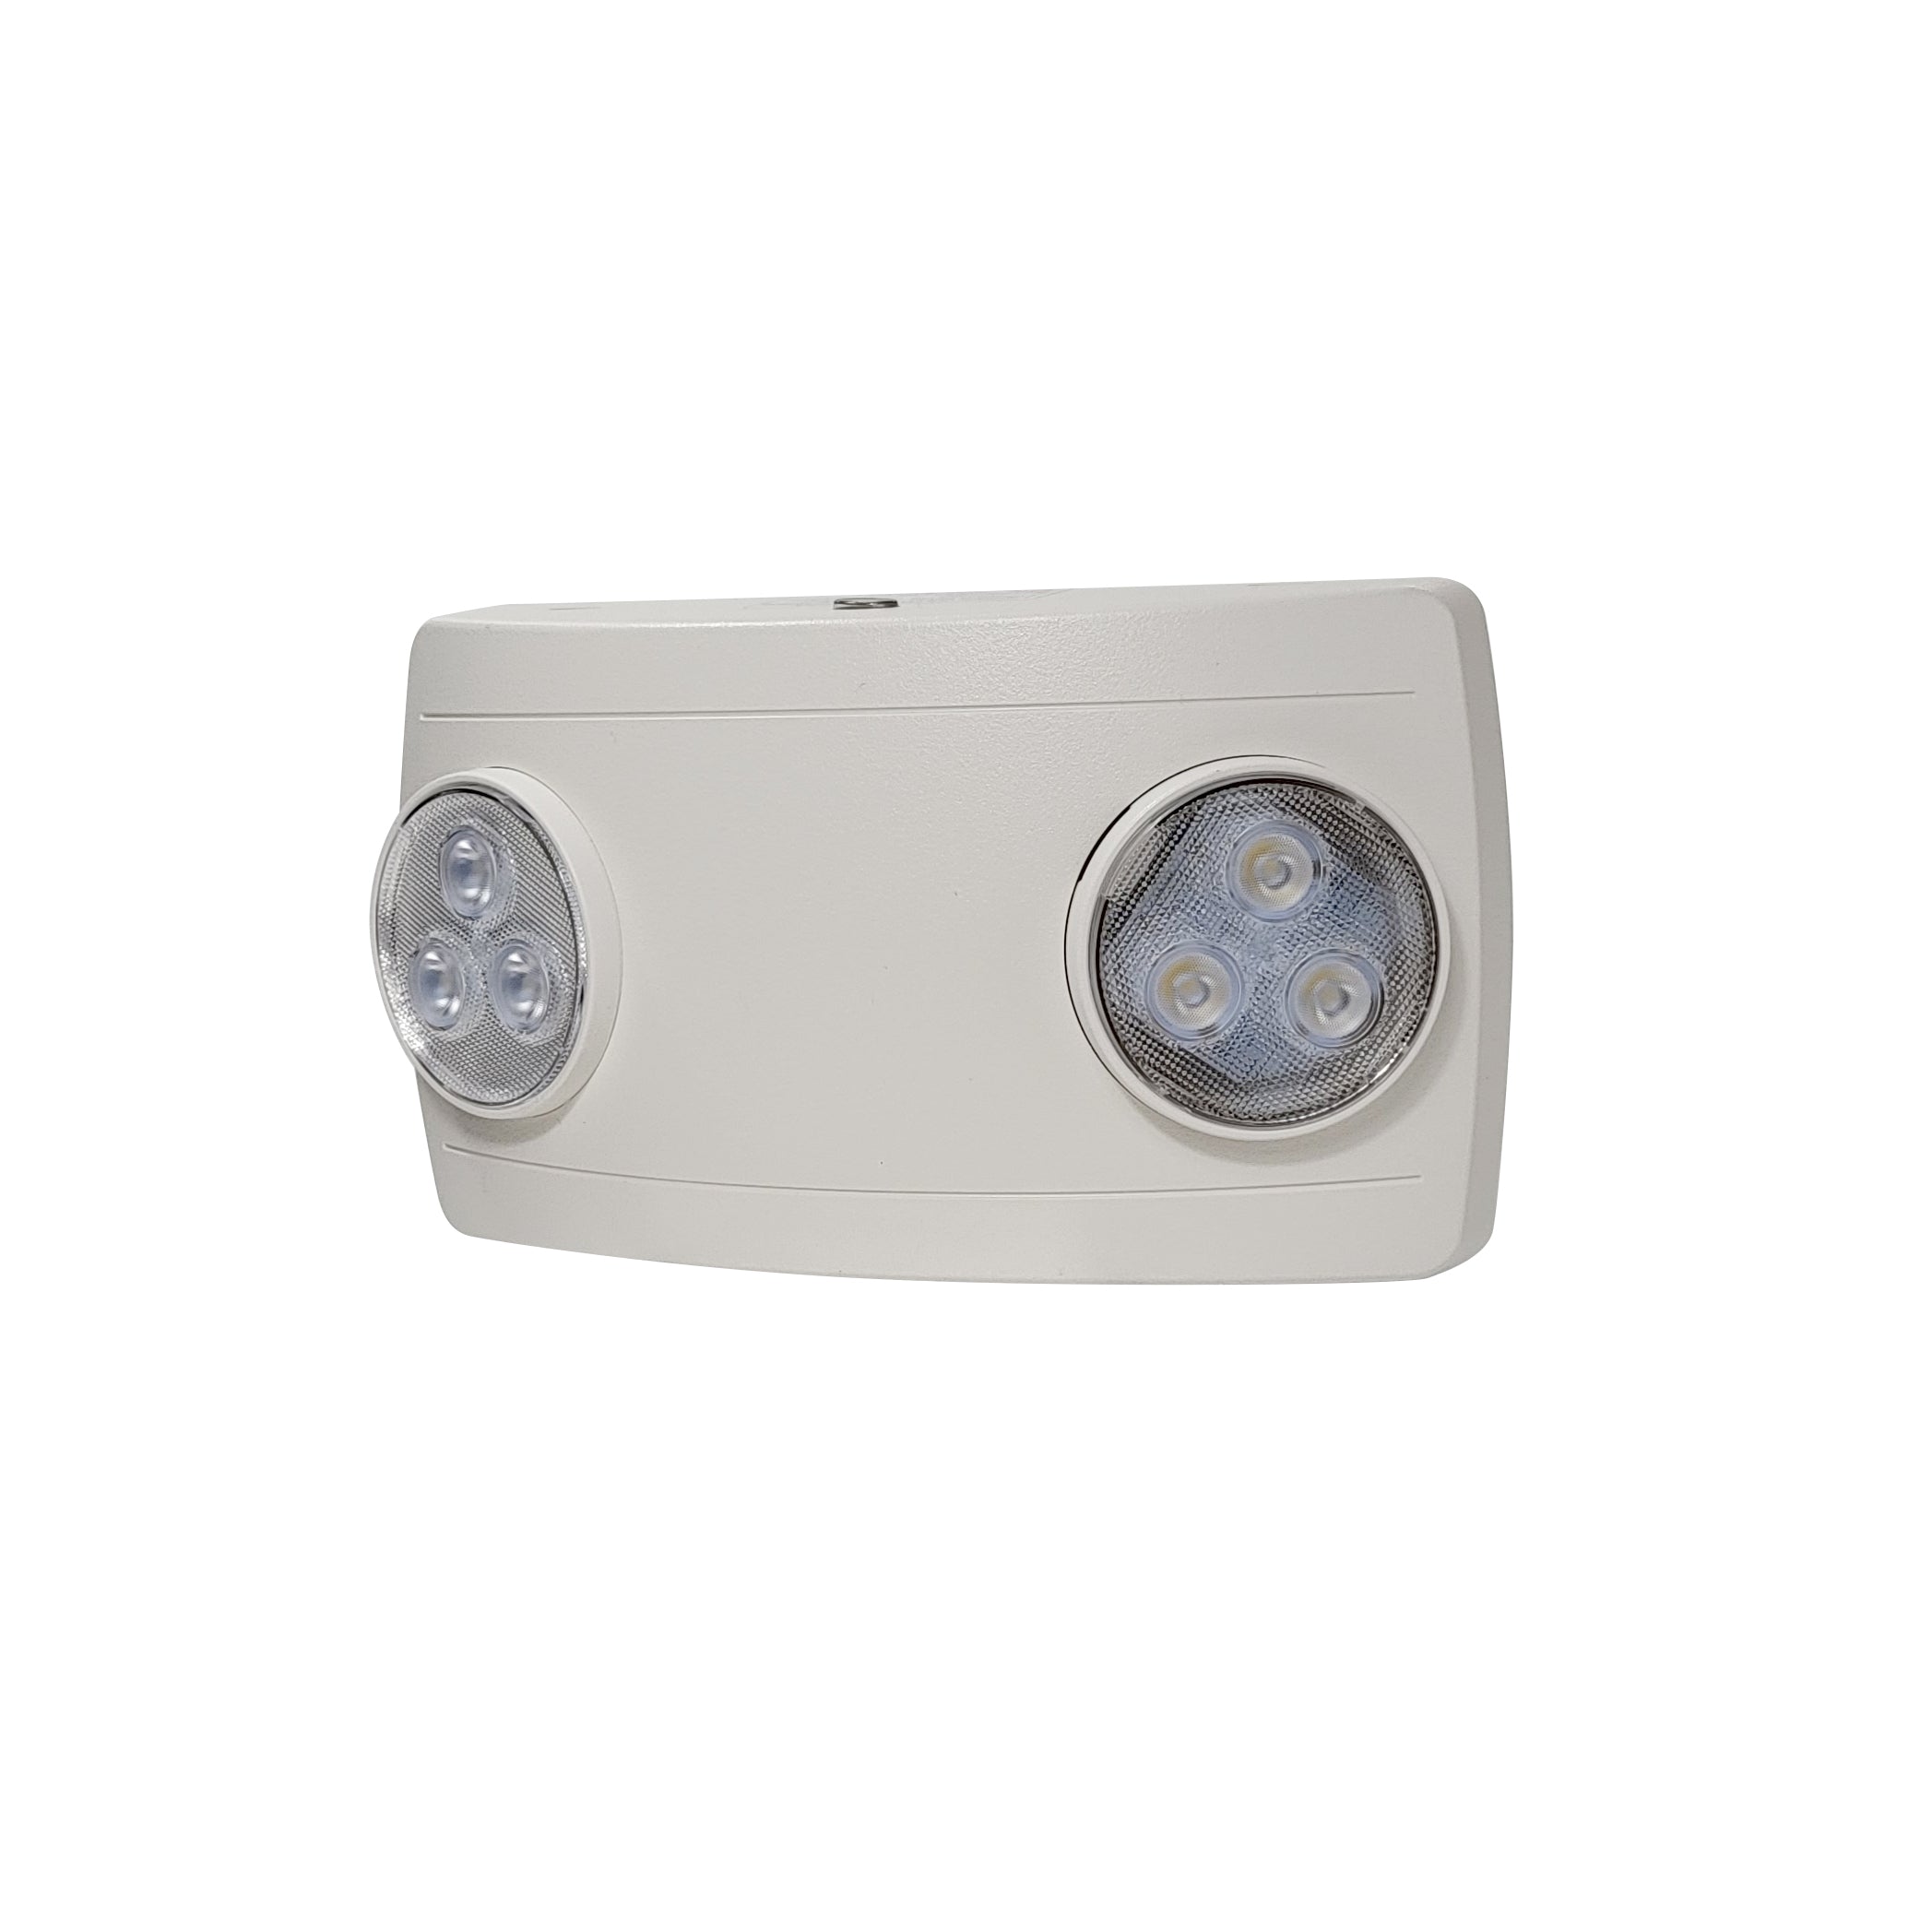 Nora Lighting NE-612LEDW Compact Dual Head LED Emergency Light, 120/277V - White